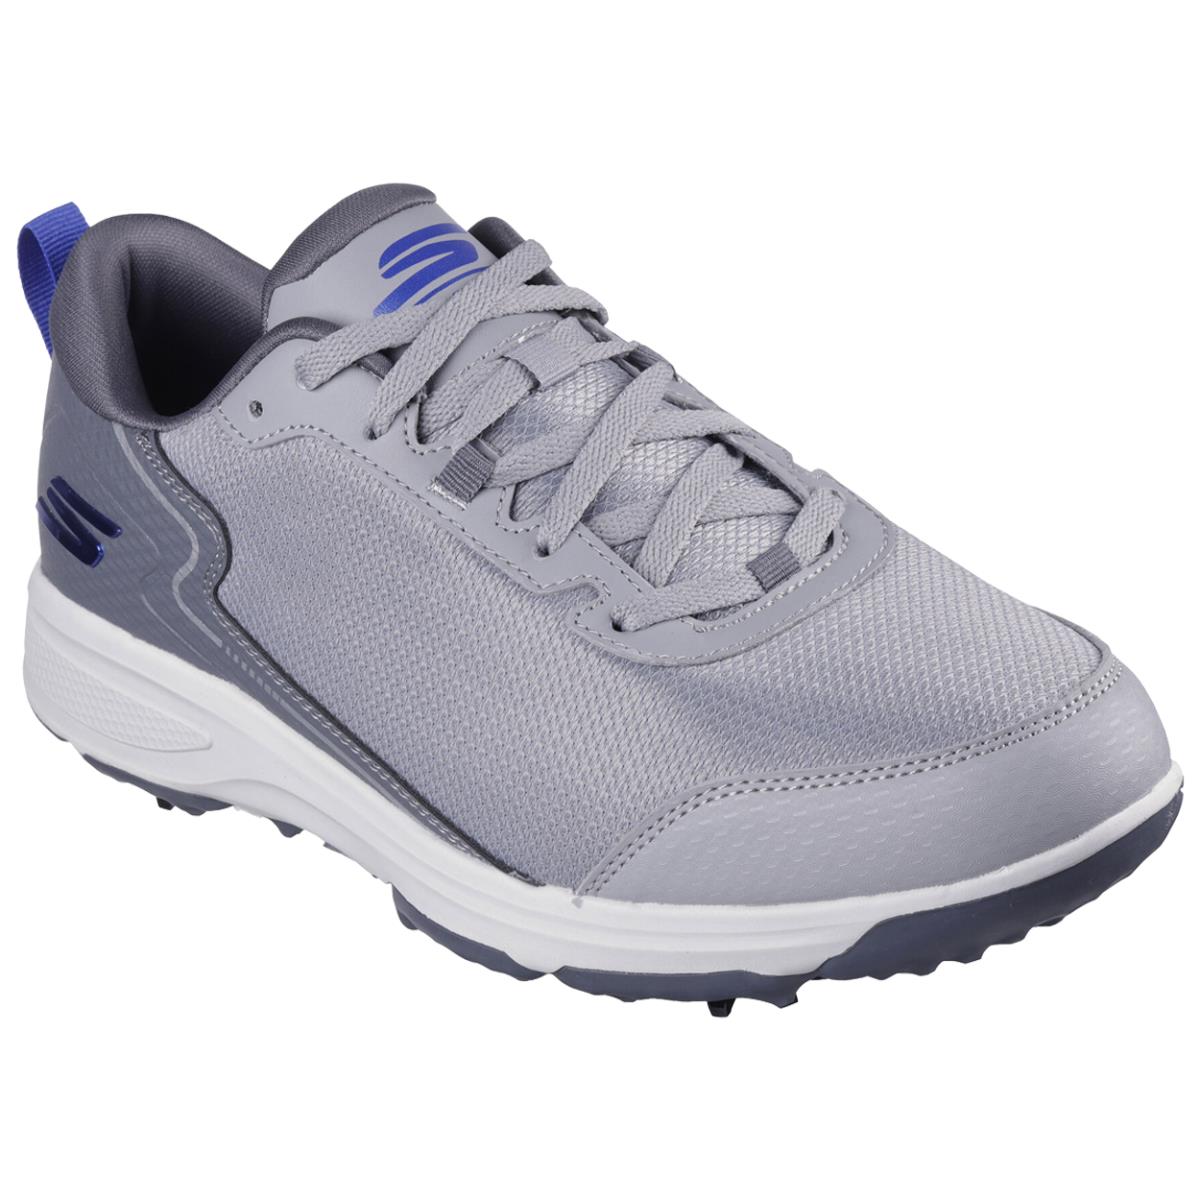 Skechers Men`s Torque Sport Fairway Relaxed Fit Soft Spike Golf Shoe Gray/Blue